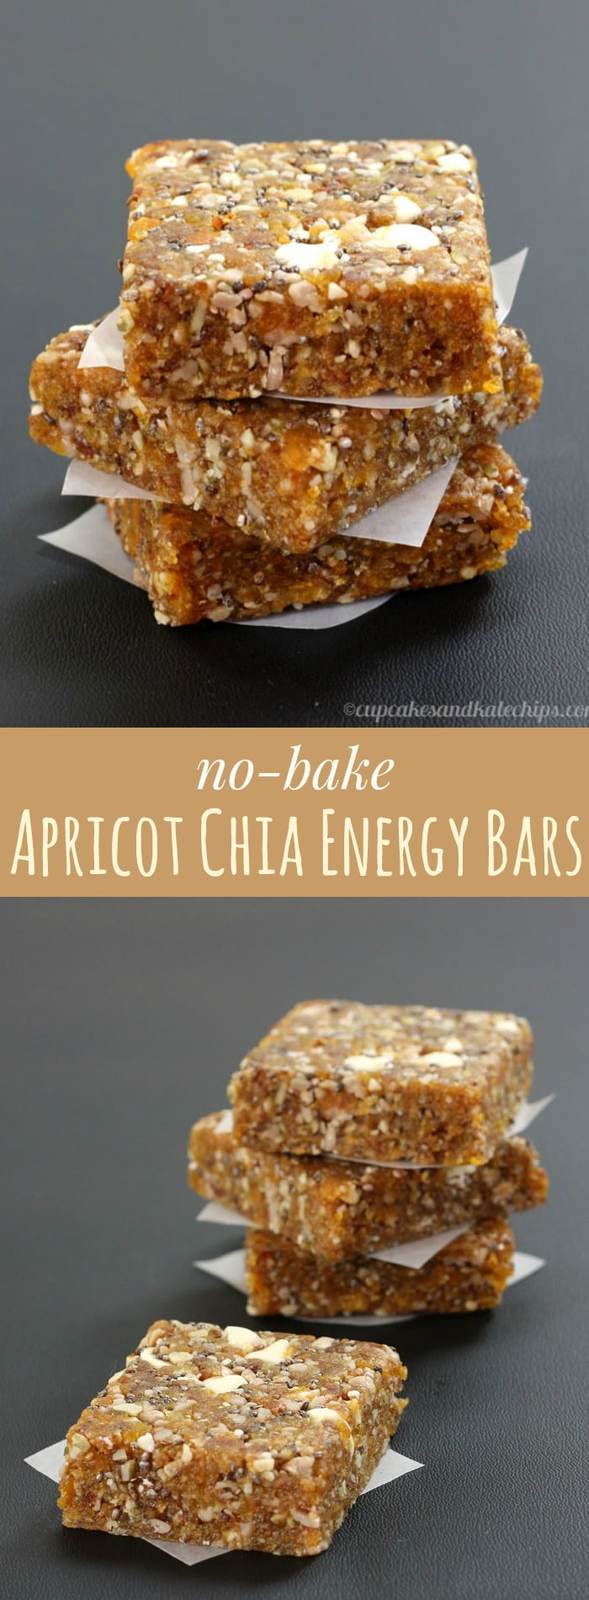 No-Bake Apricot Chia Energy Bars - Cupcakes & Kale Chips - 589 x 1600 jpeg 99kB